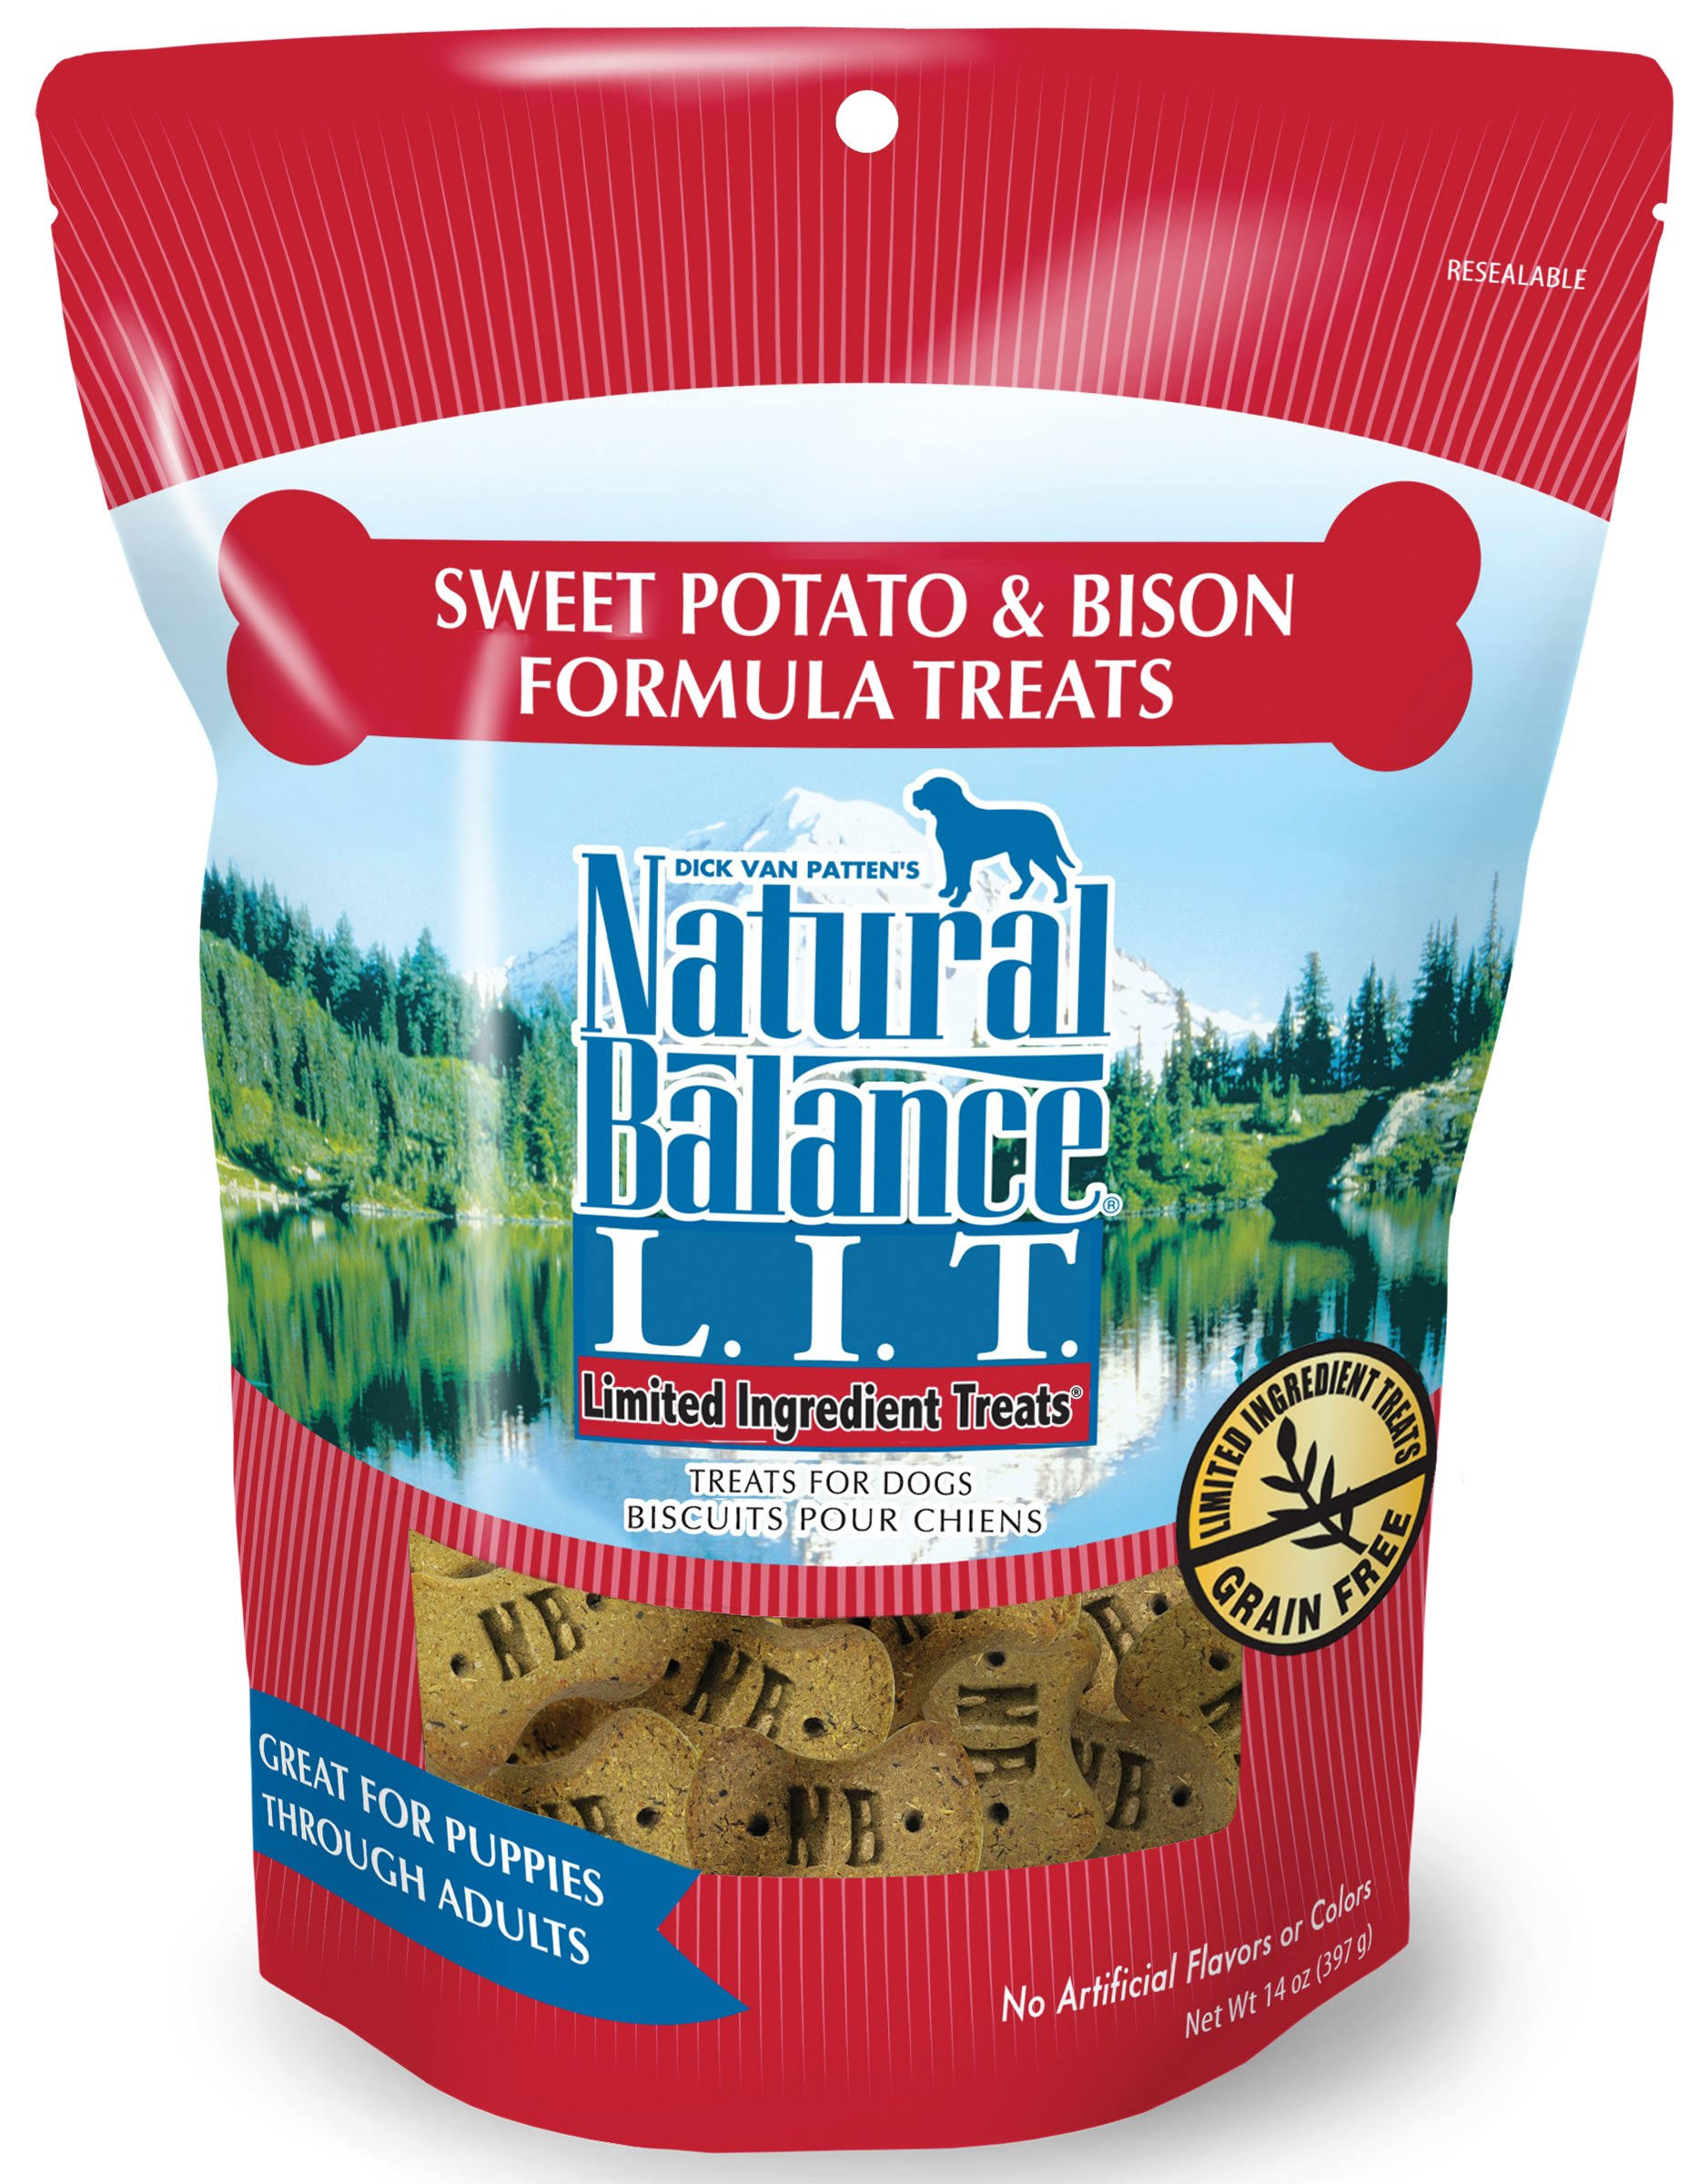 Natural Balance Limited Ingredient Dog Treats - Sweet Potato & Bison Formula, 14oz